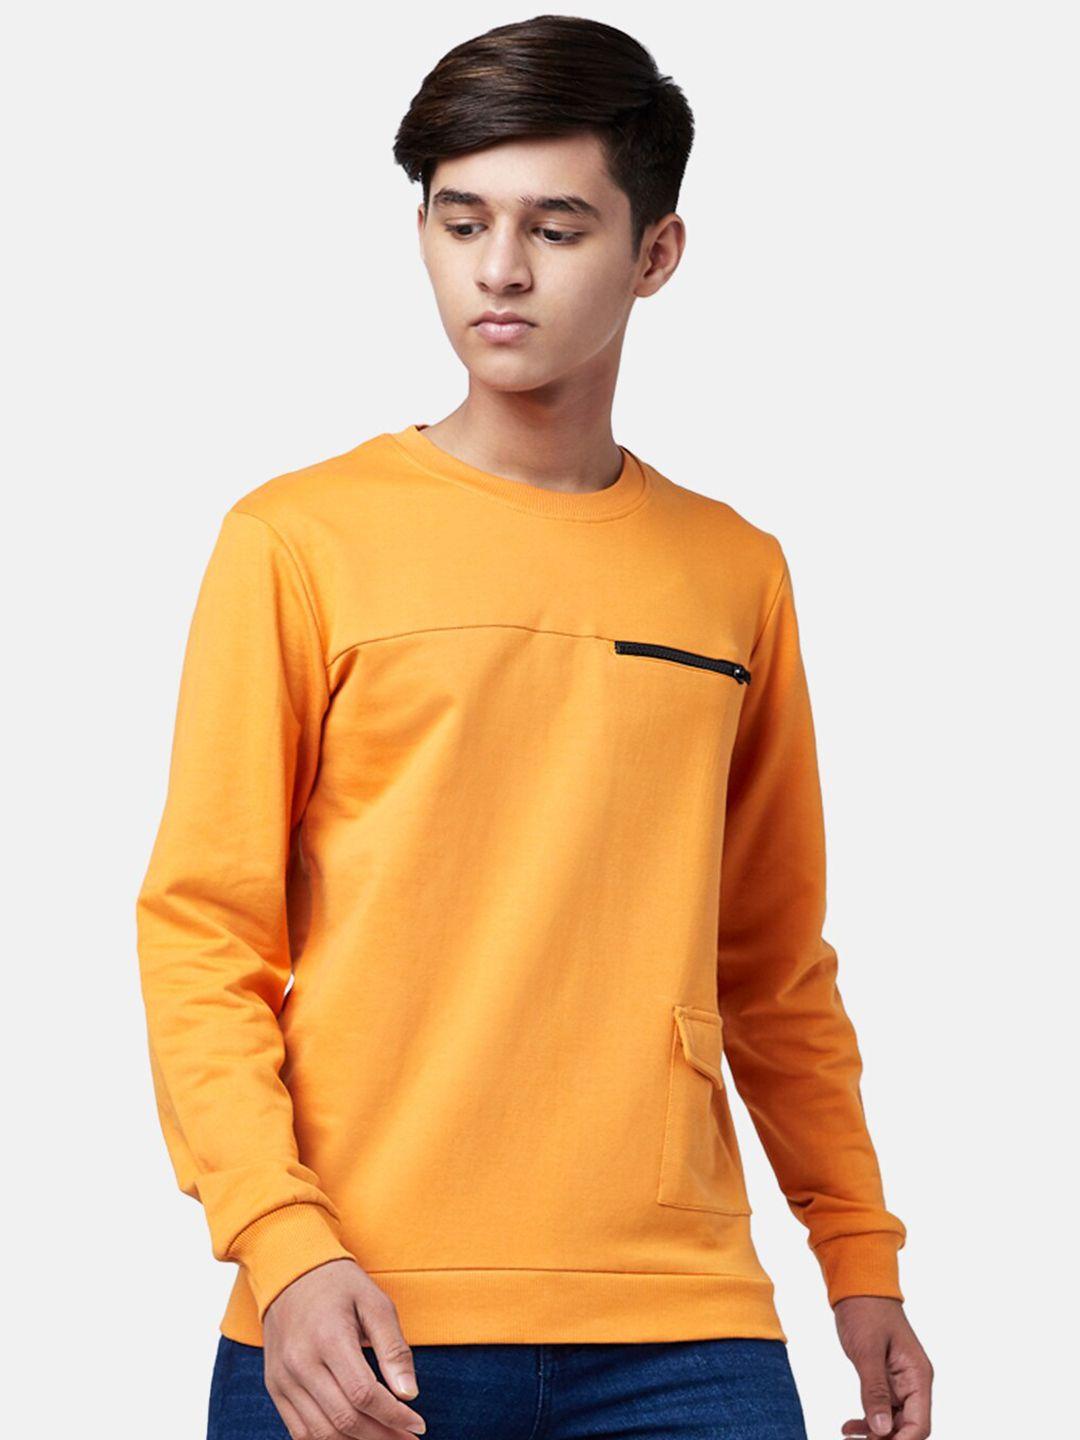 coolsters by pantaloons boys orange cotton sweatshirt